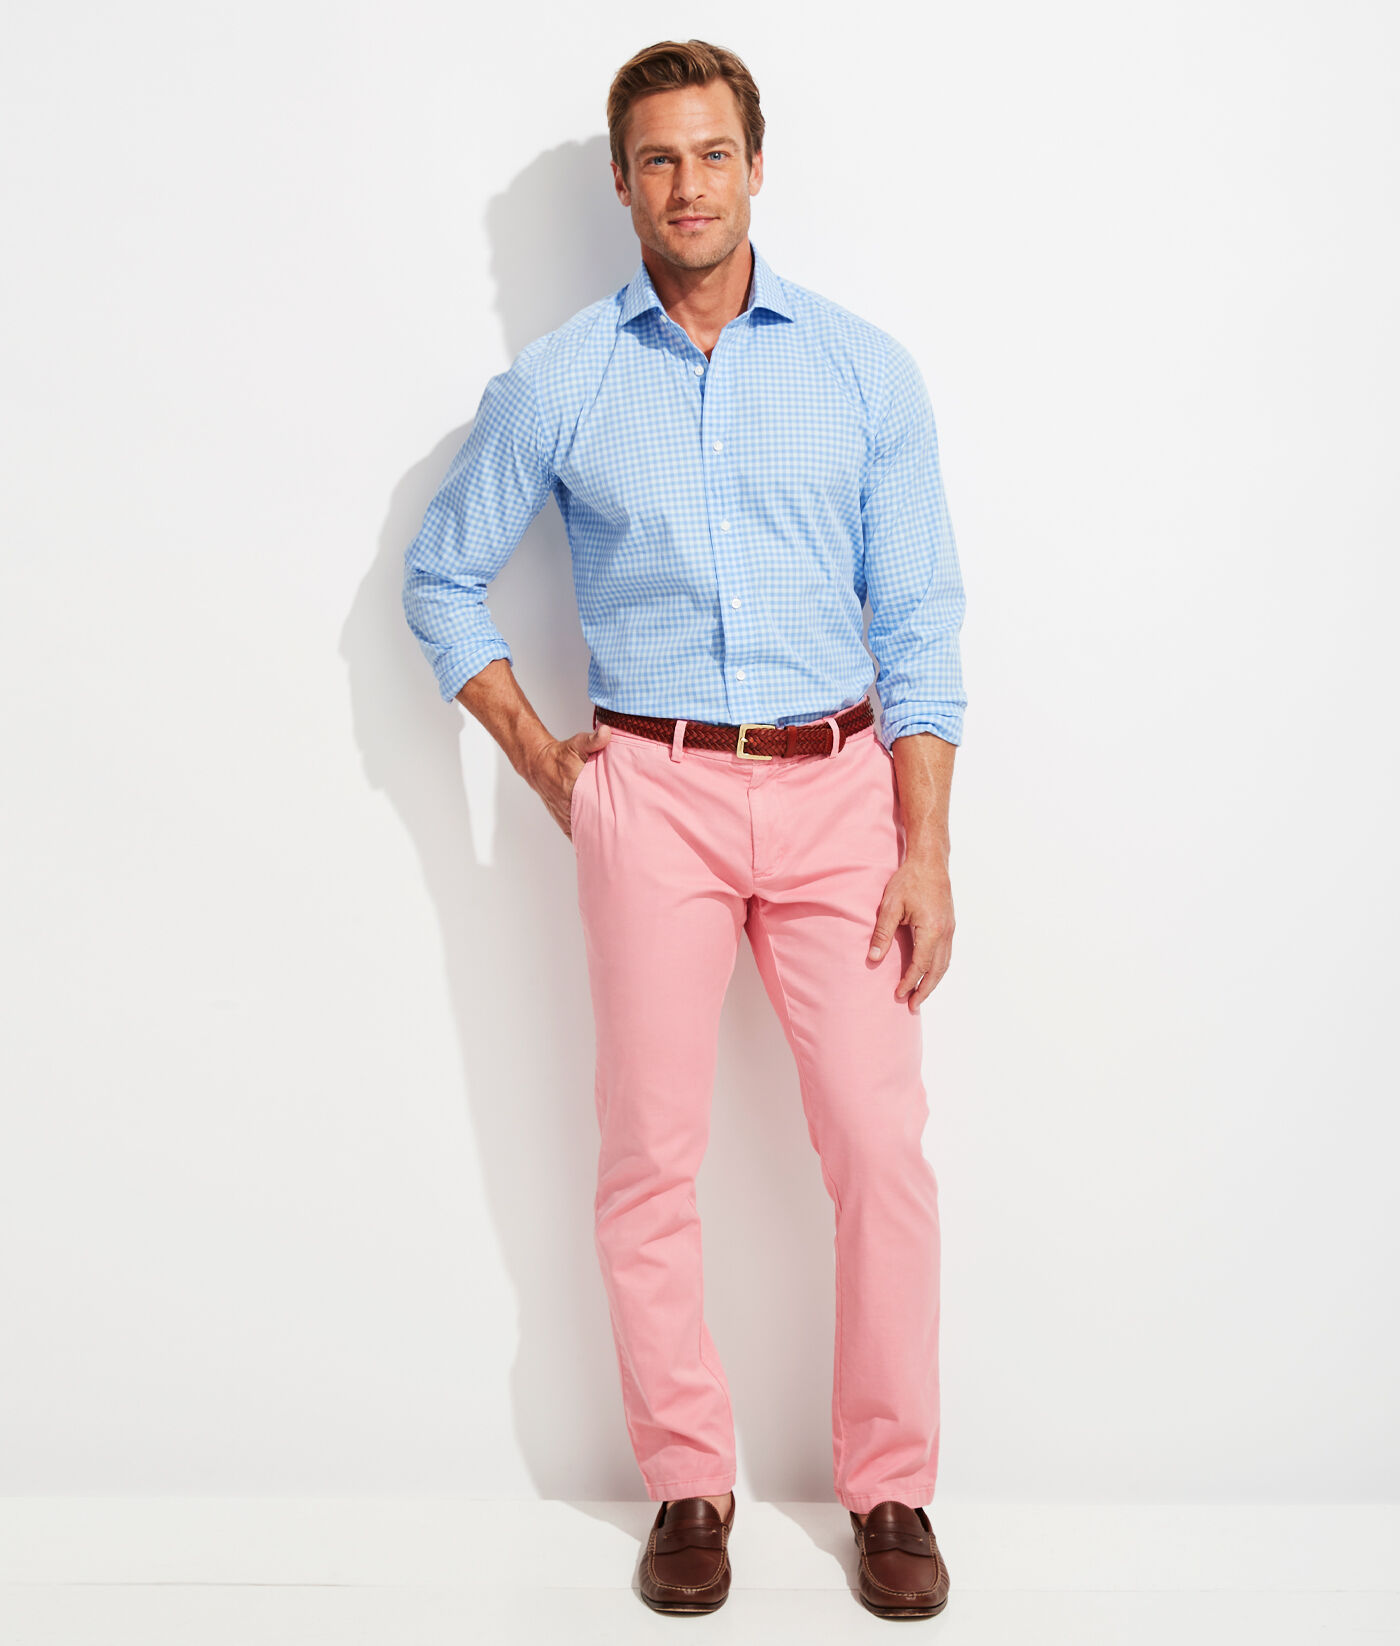 ROMWE Guys Floral Embroidery Corduroy Pants | Mens pink pants, Pants outfit  men, Street fashion men streetwear